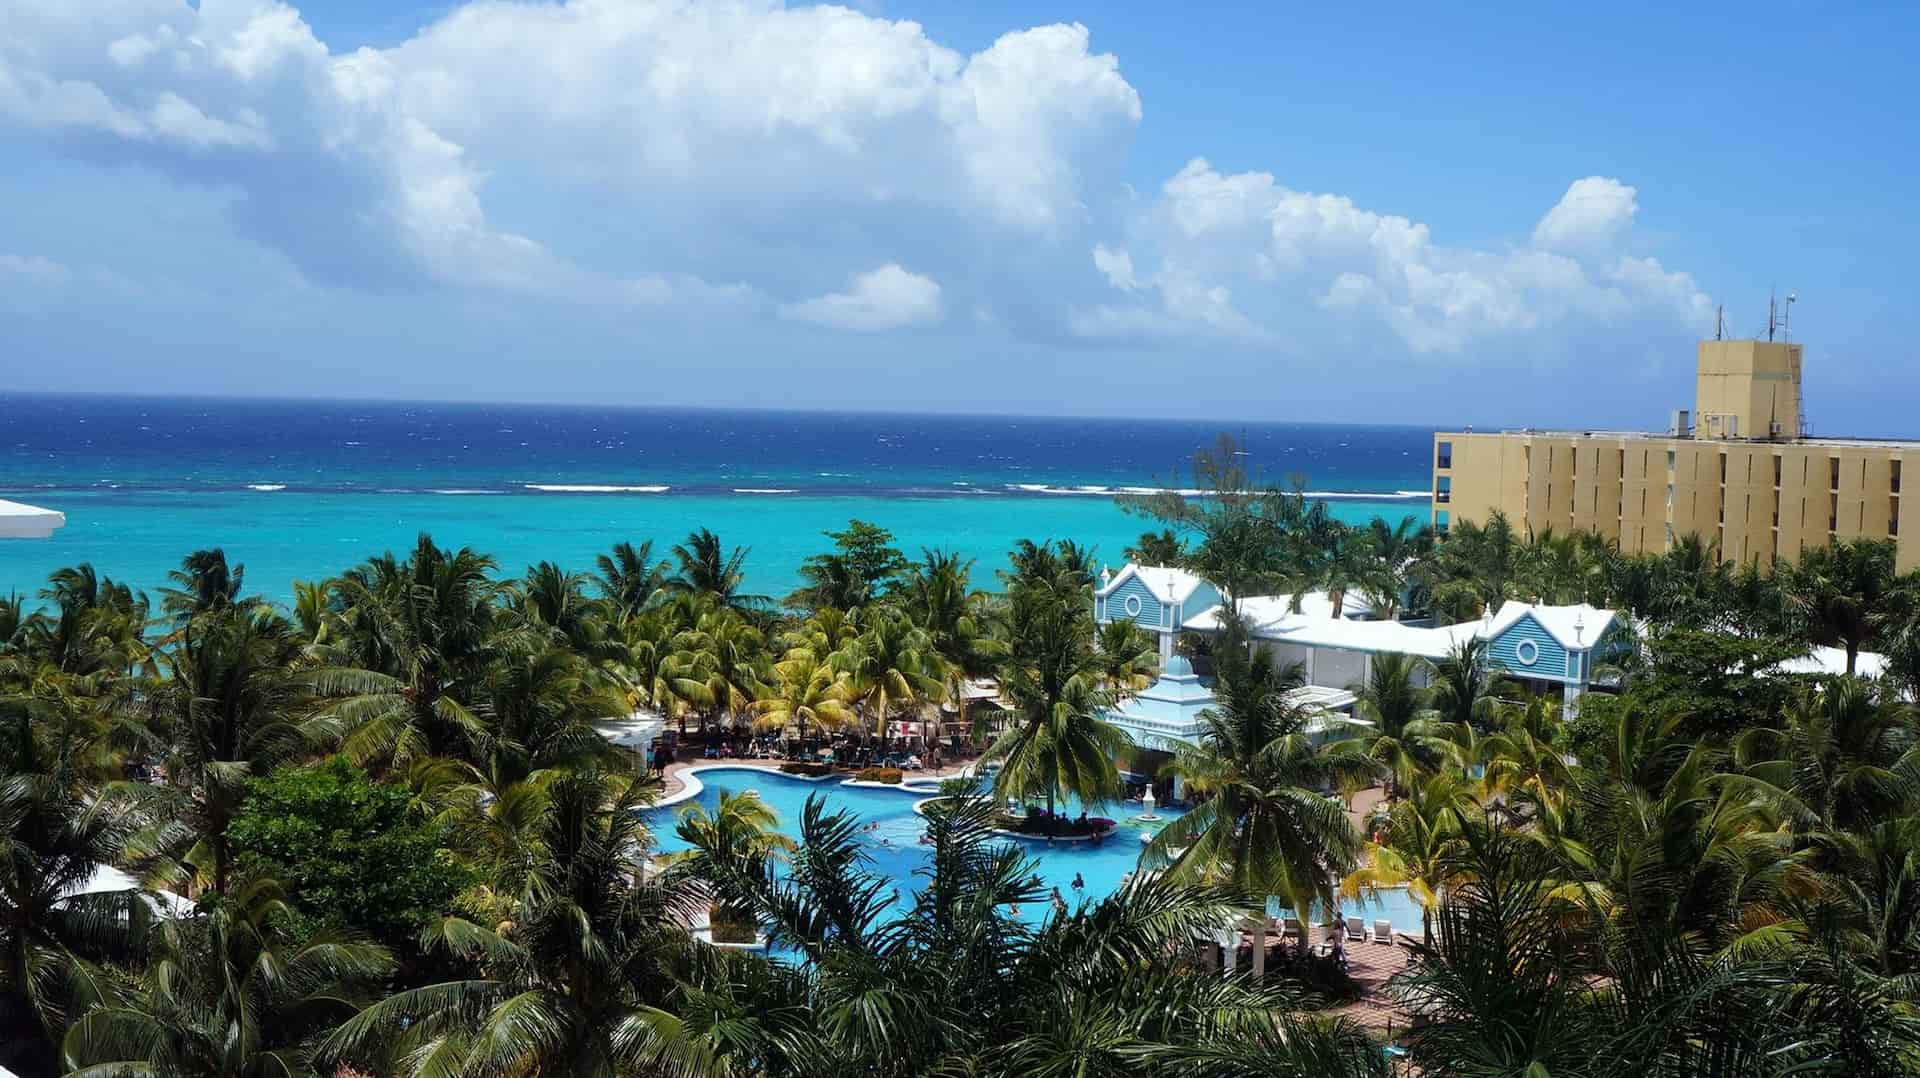 6 Best Hostels in Jamaica: Budget-friendly hostels in 2023!